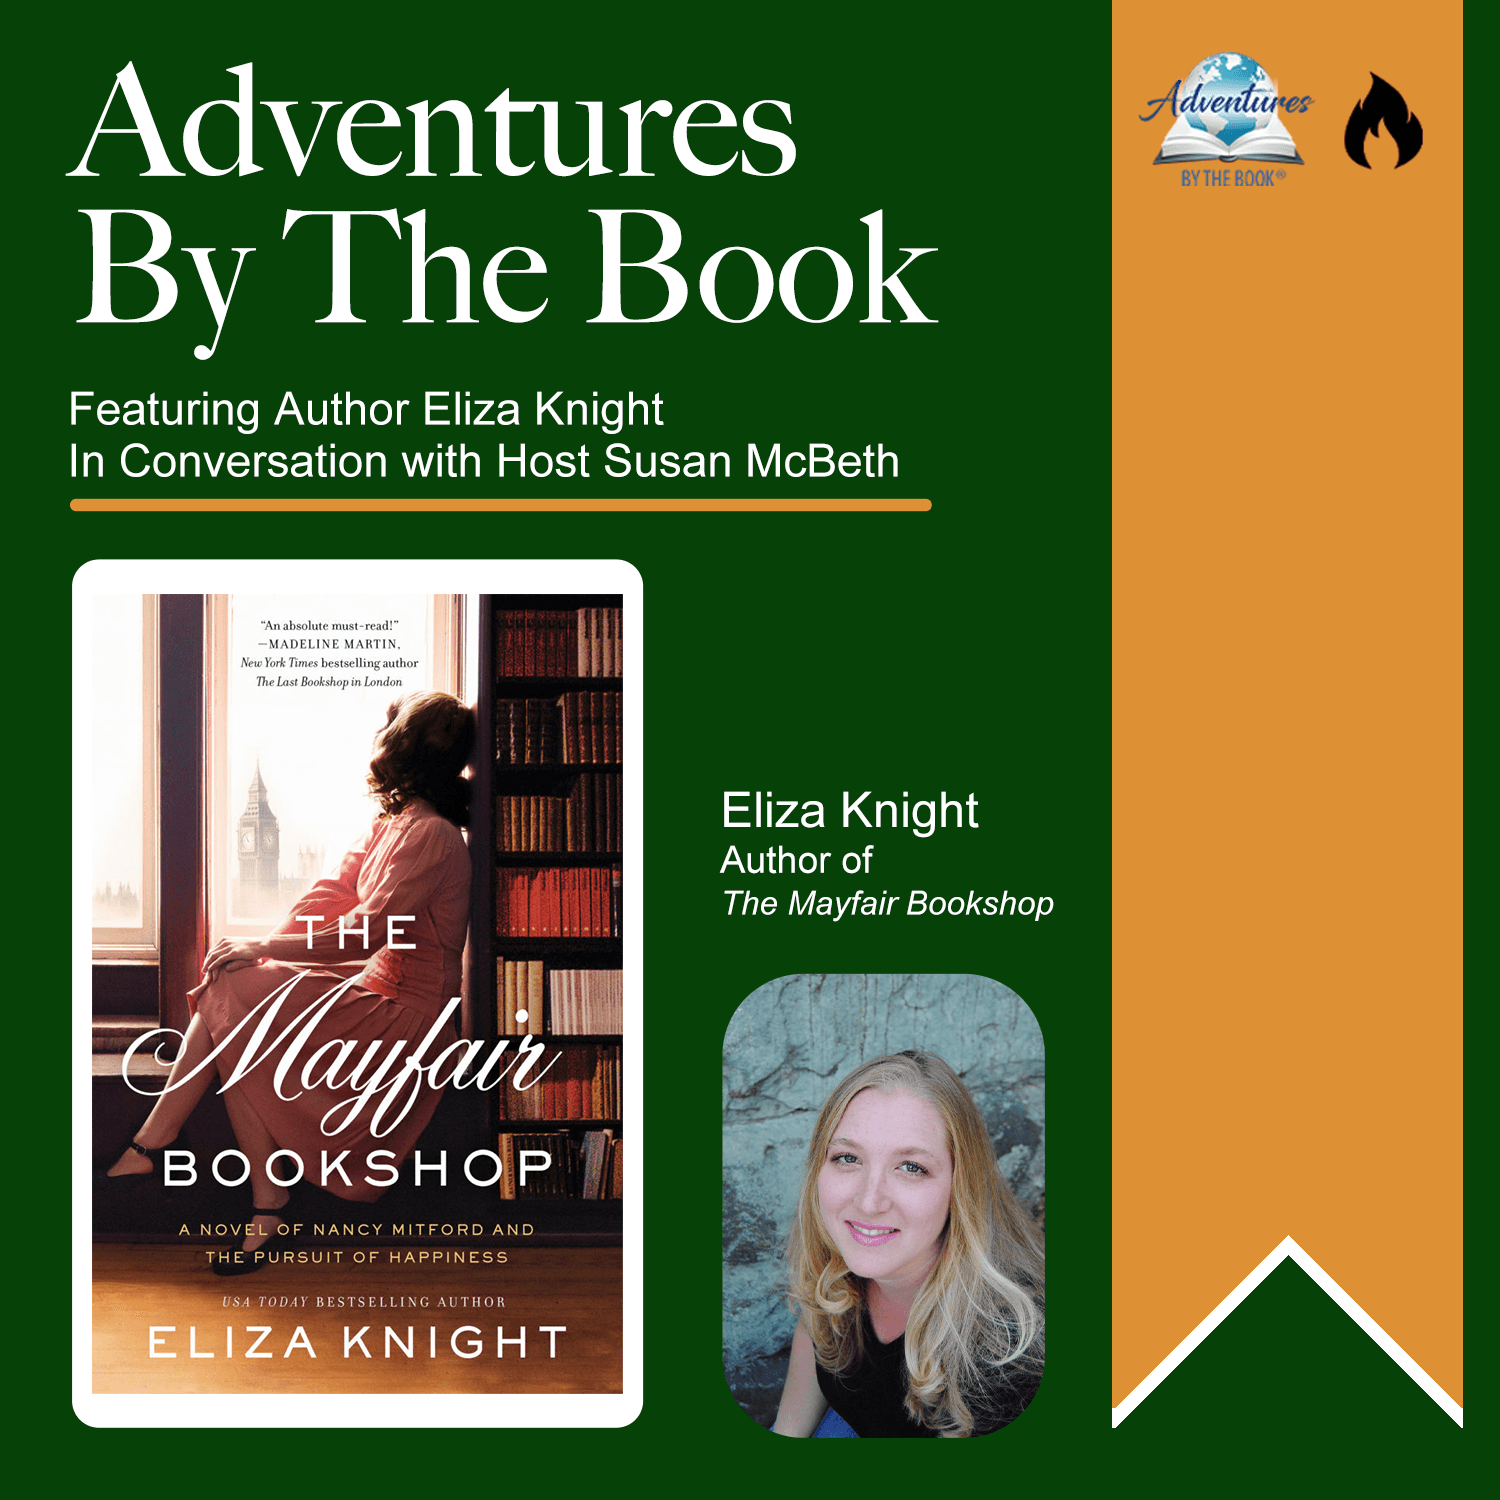 Author Eliza Knight: The Mayfair Bookshop